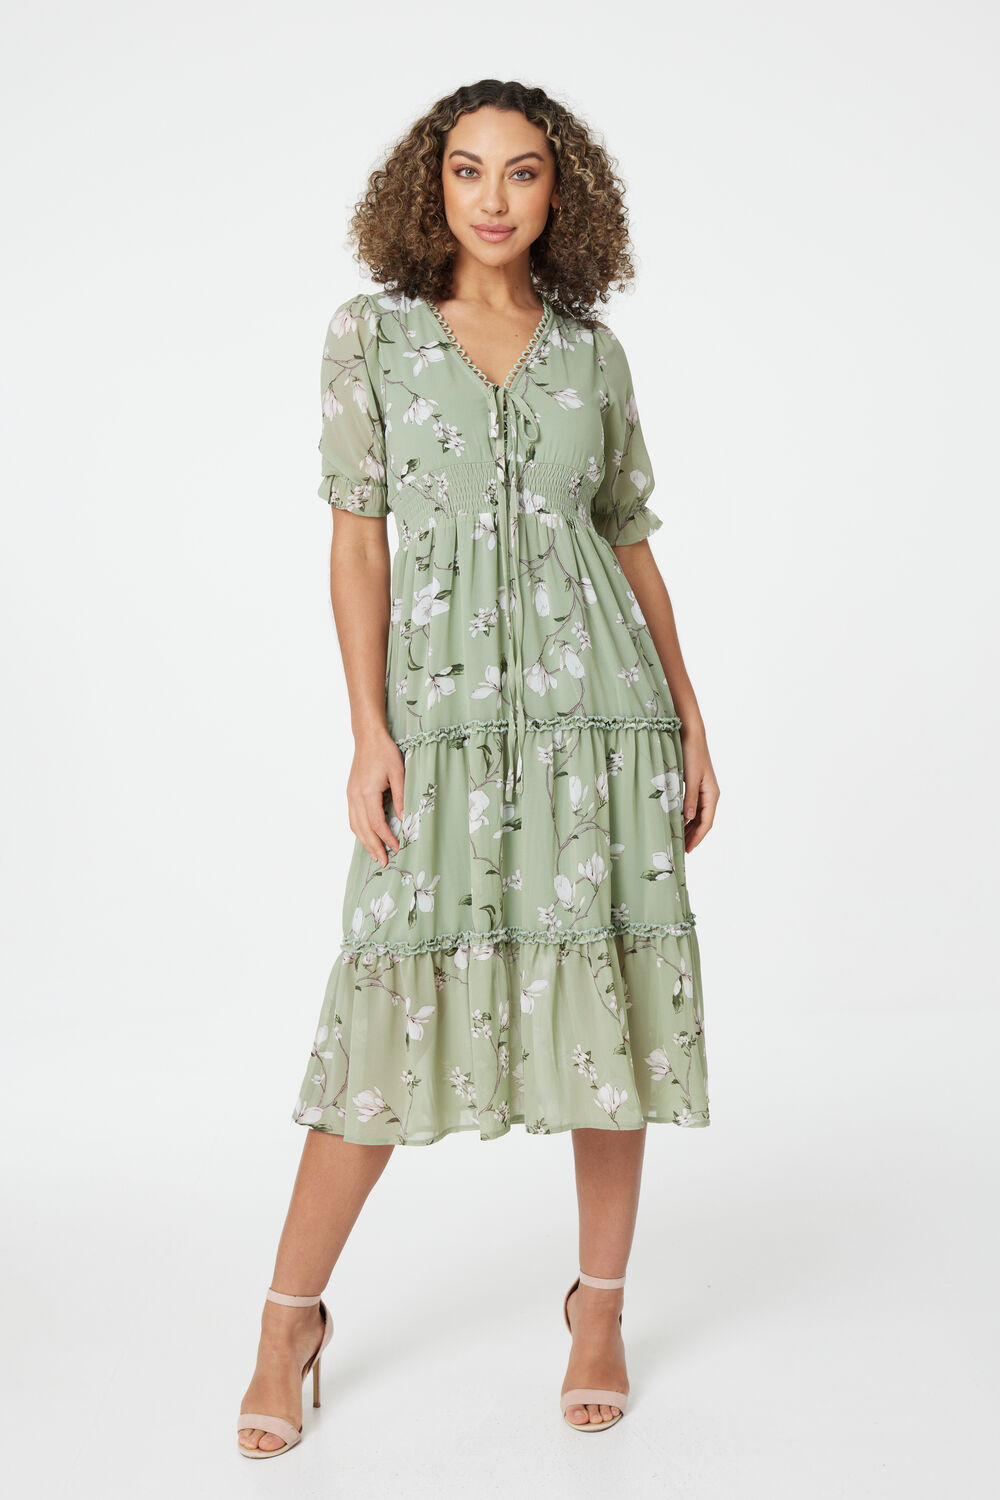 Izabel London Women’s Green Floral Tie Front Midi Tea Dress, Size: 10